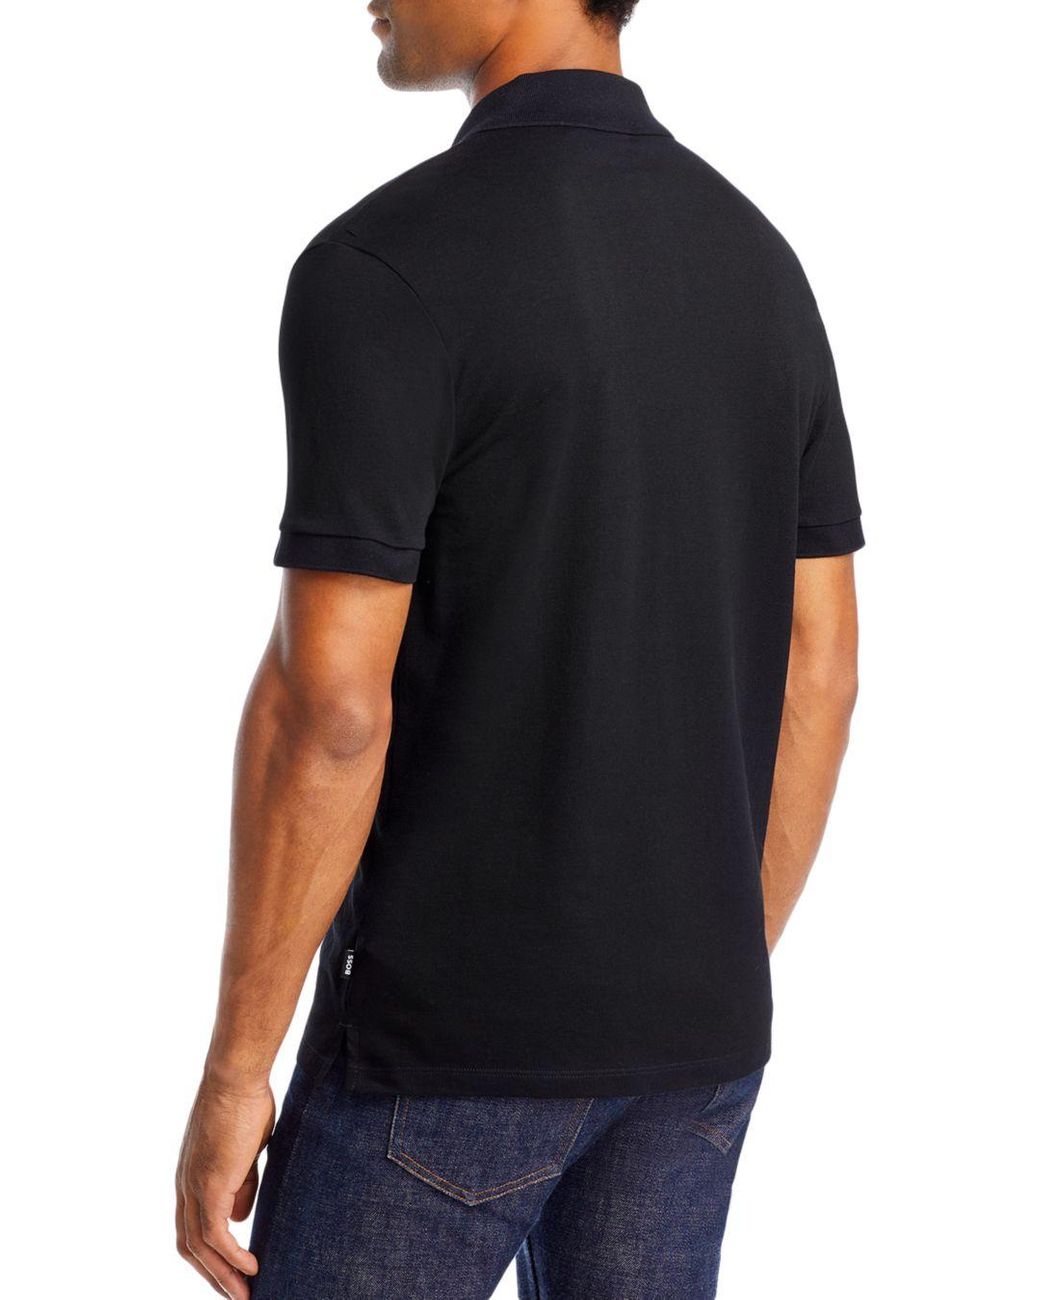 BOSS by HUGO BOSS Pallas Regular Fit Polo Shirt in Black for Men | Lyst